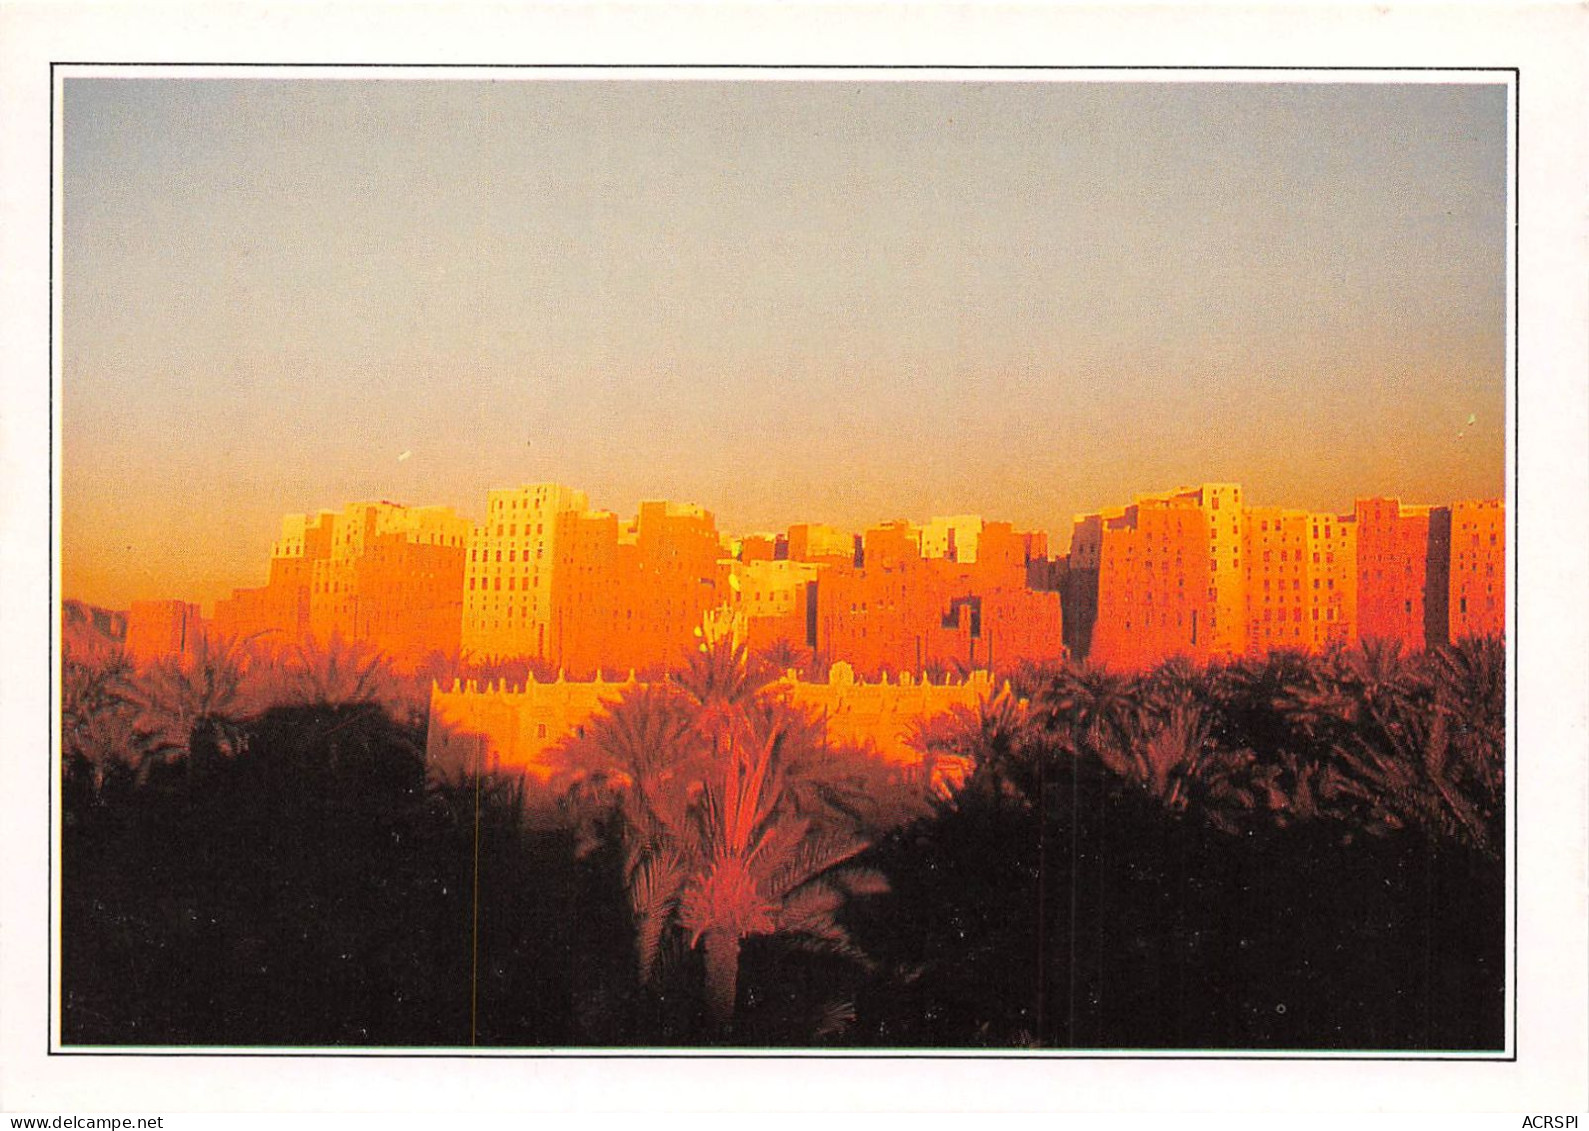 Yemen Shibam La Manhattan Du Desert  (scan Recto Verso ) Nono0035 - Jemen